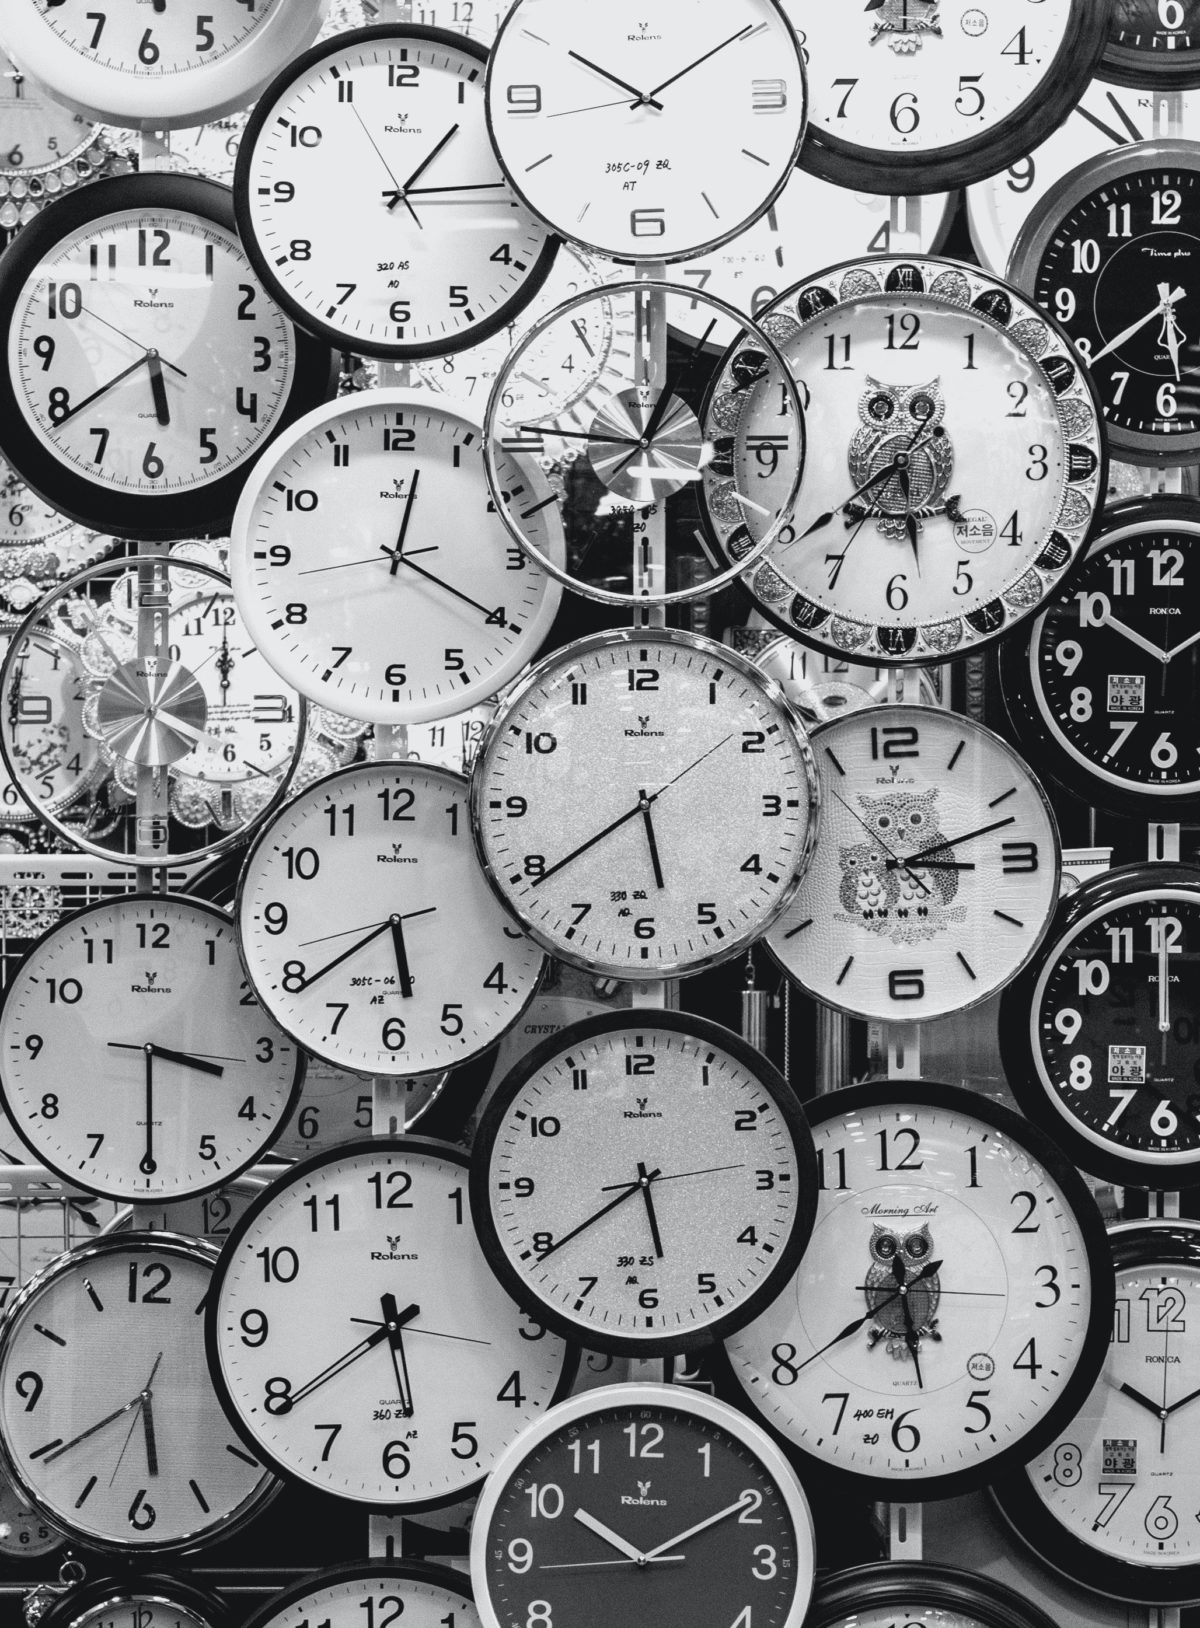 A wall full of clocks.